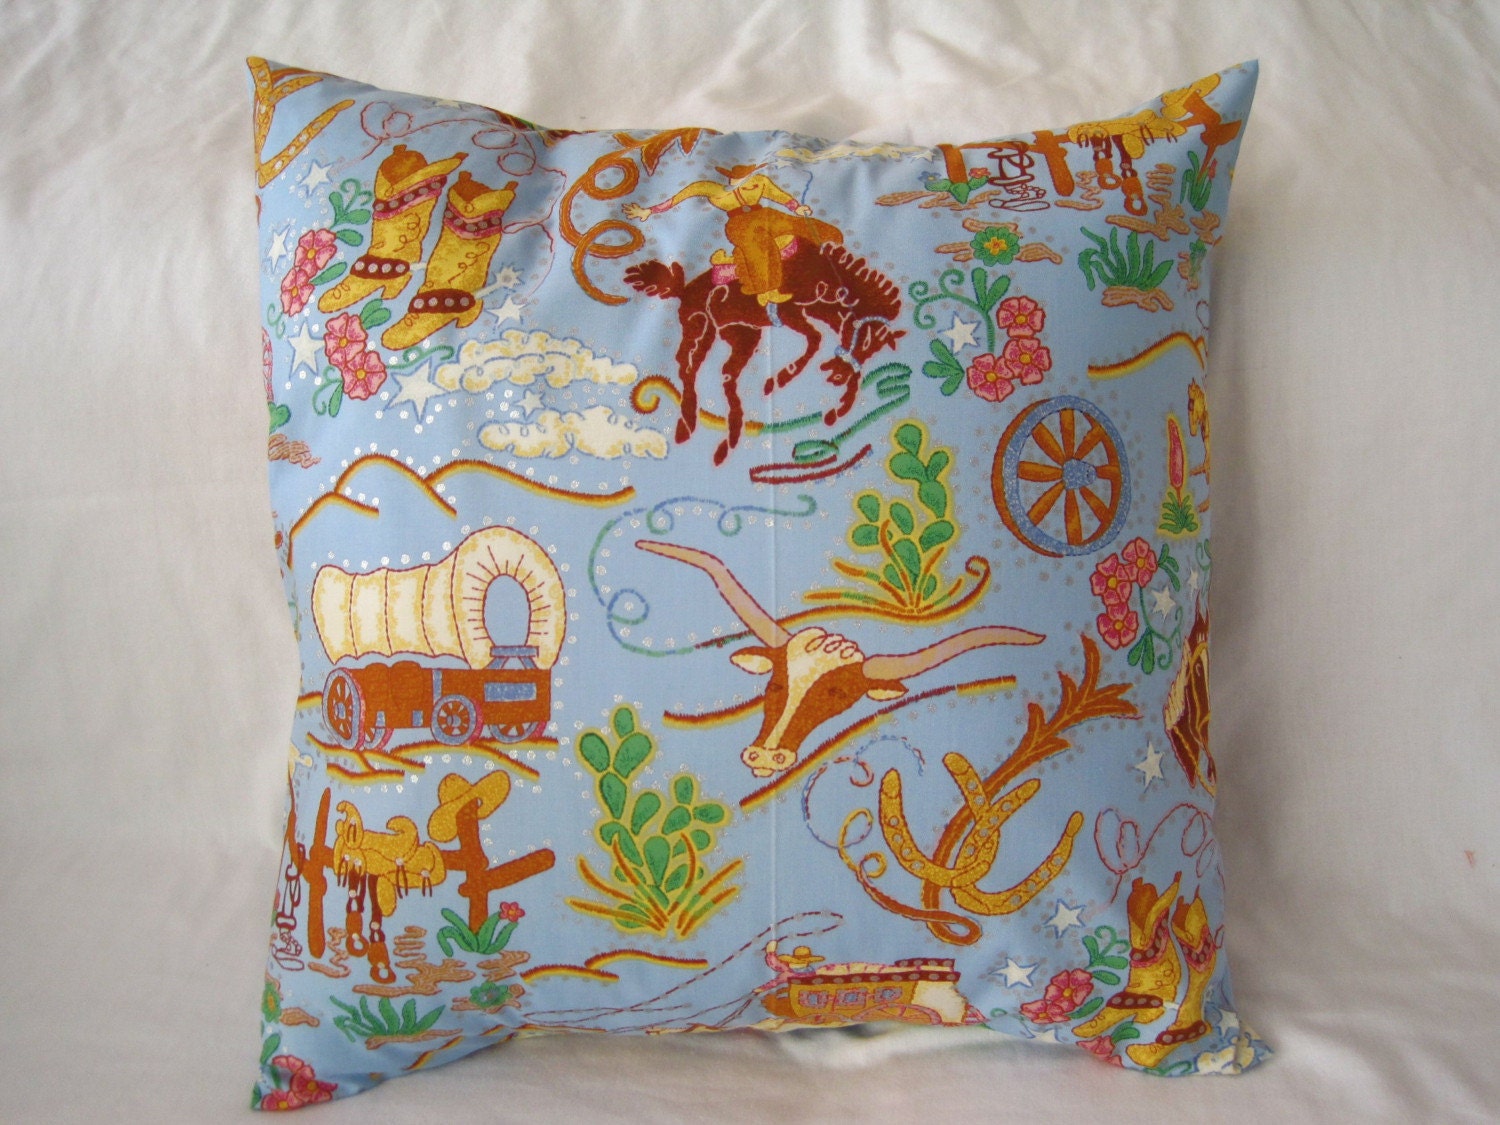 Rhinestone Cowboy pillow